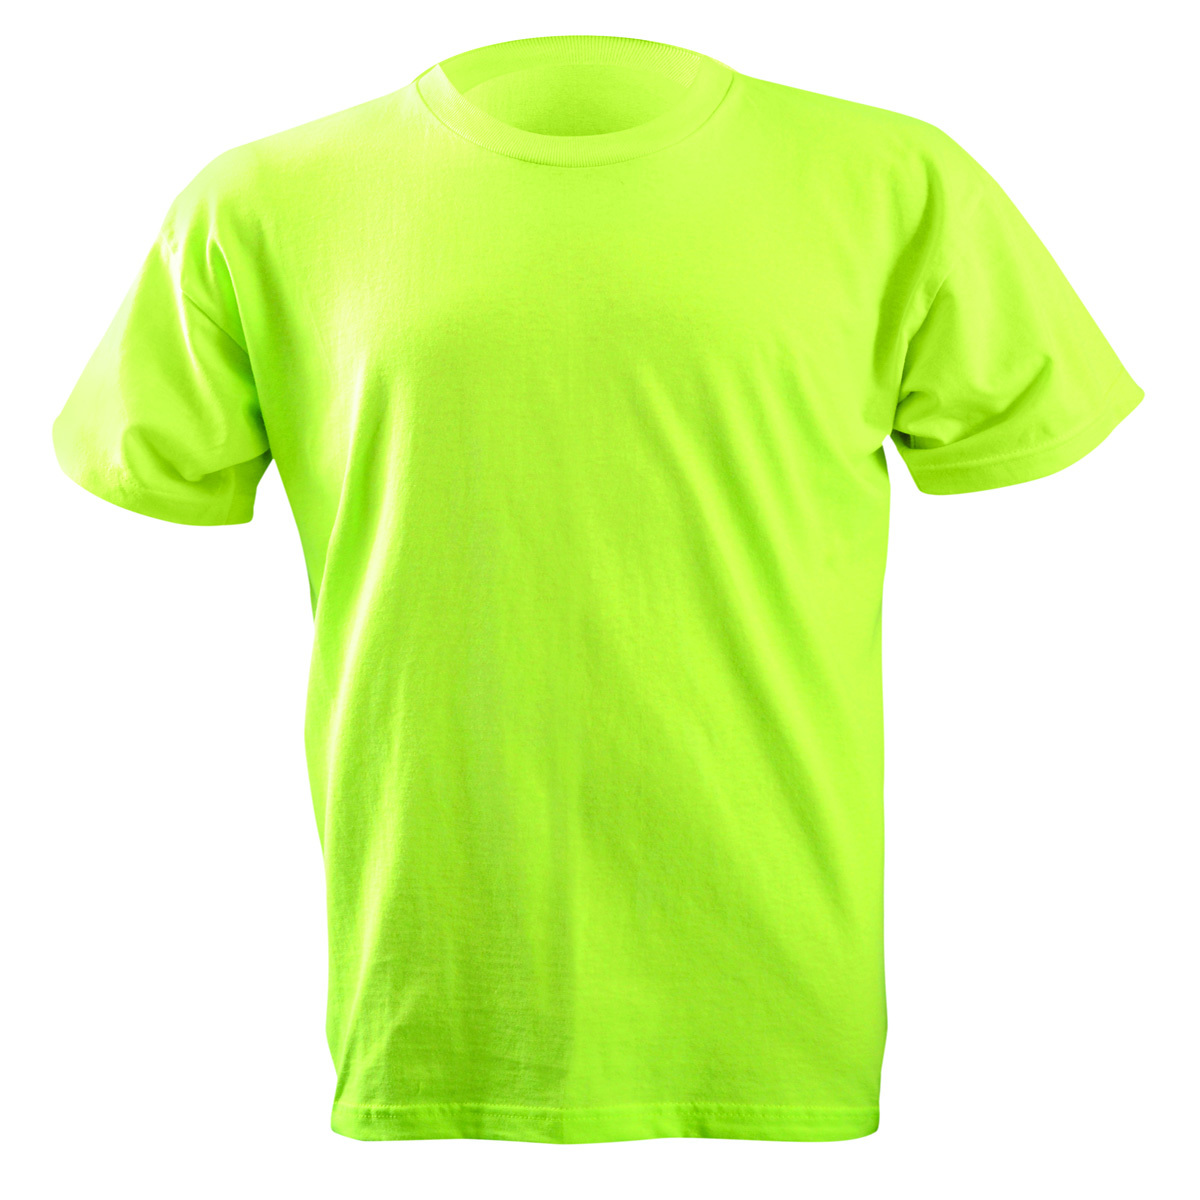 OccuNomix Size 2X Yellow 6 Ounce Cotton T-Shirt